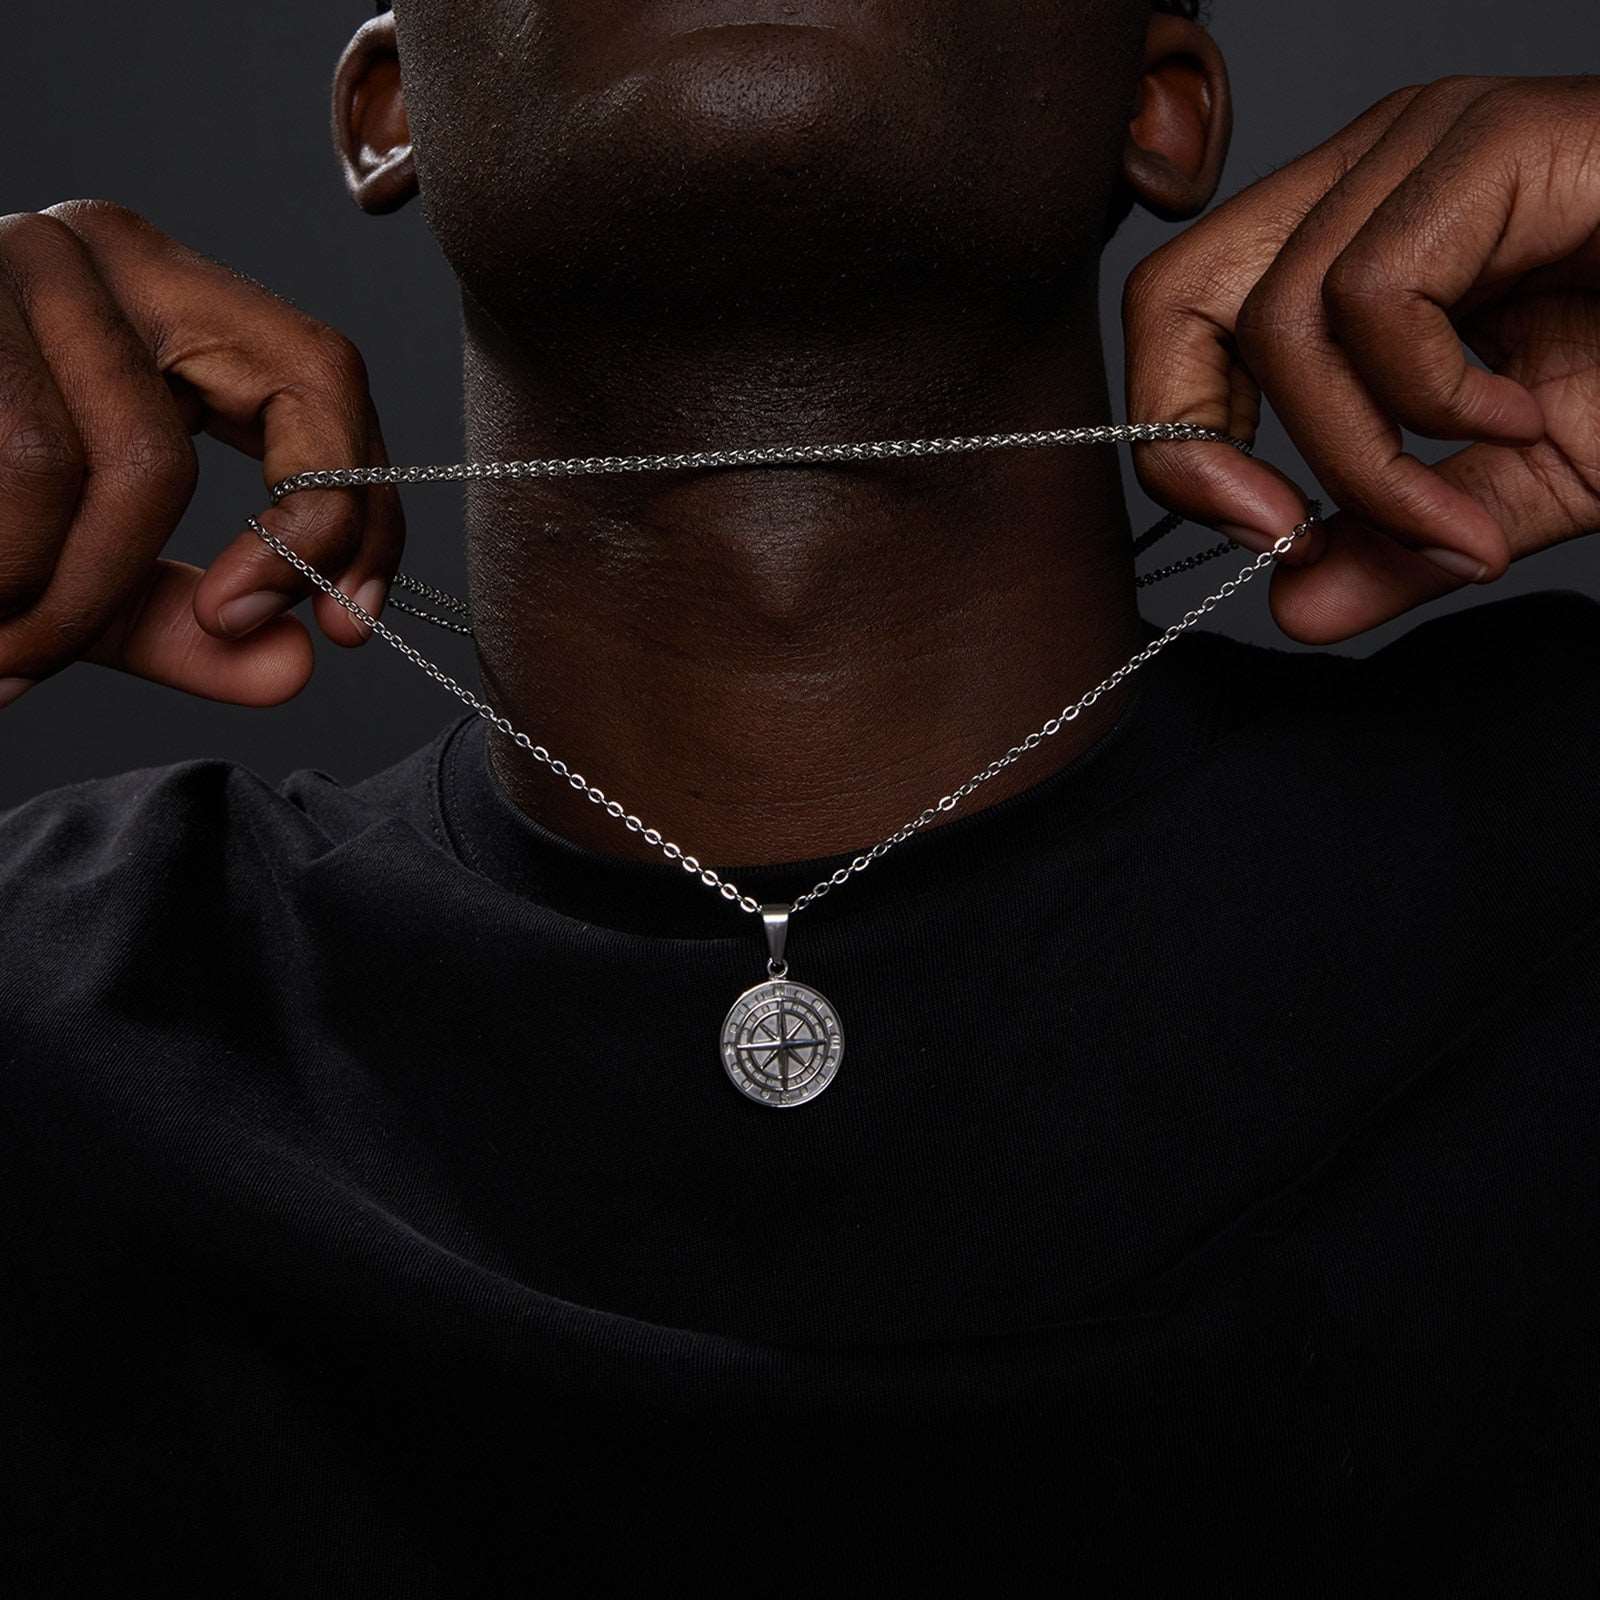 Layered Necklaces for Men, Sailing Travel Compass Pendant Men's Necklace